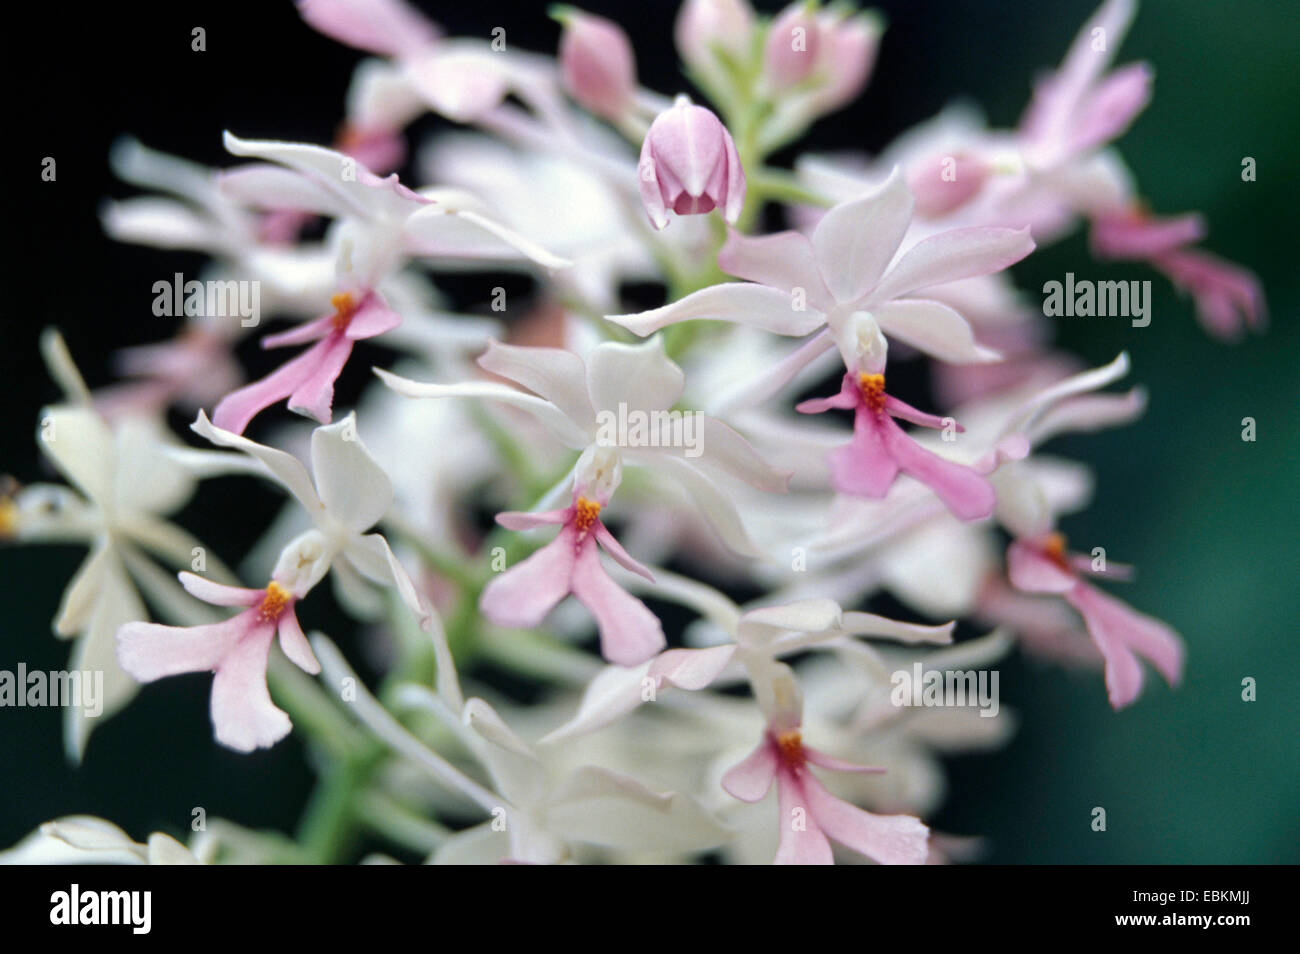 Calanthe (Calanthe rosea), flowers Stock Photo